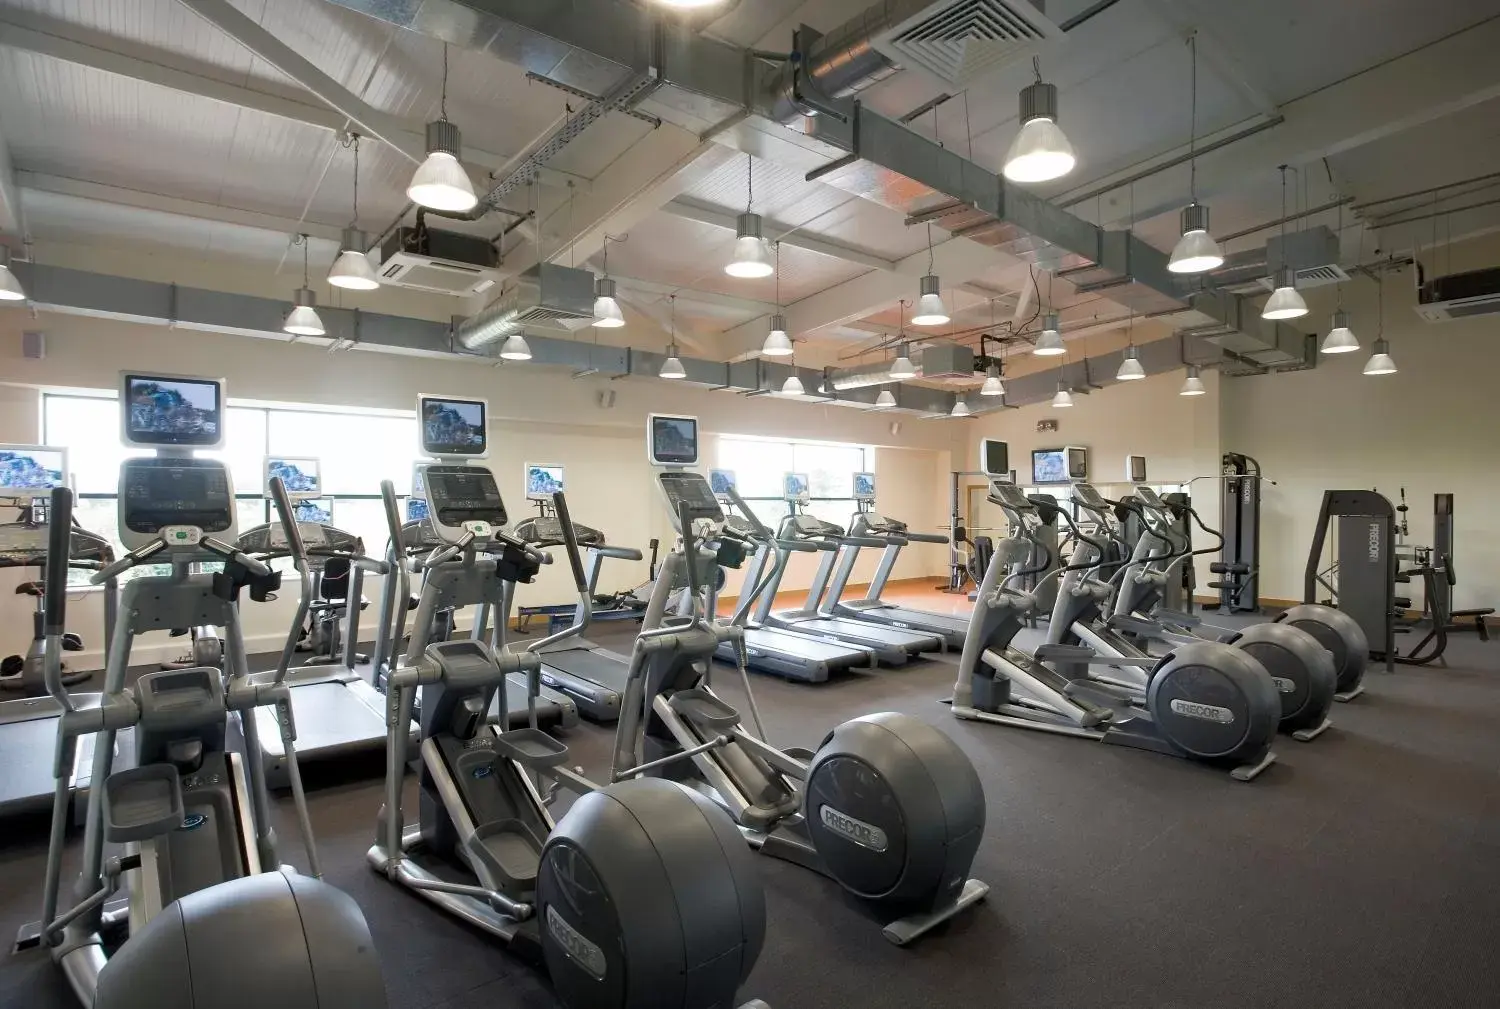 Fitness centre/facilities, Fitness Center/Facilities in Maldron Hotel Portlaoise